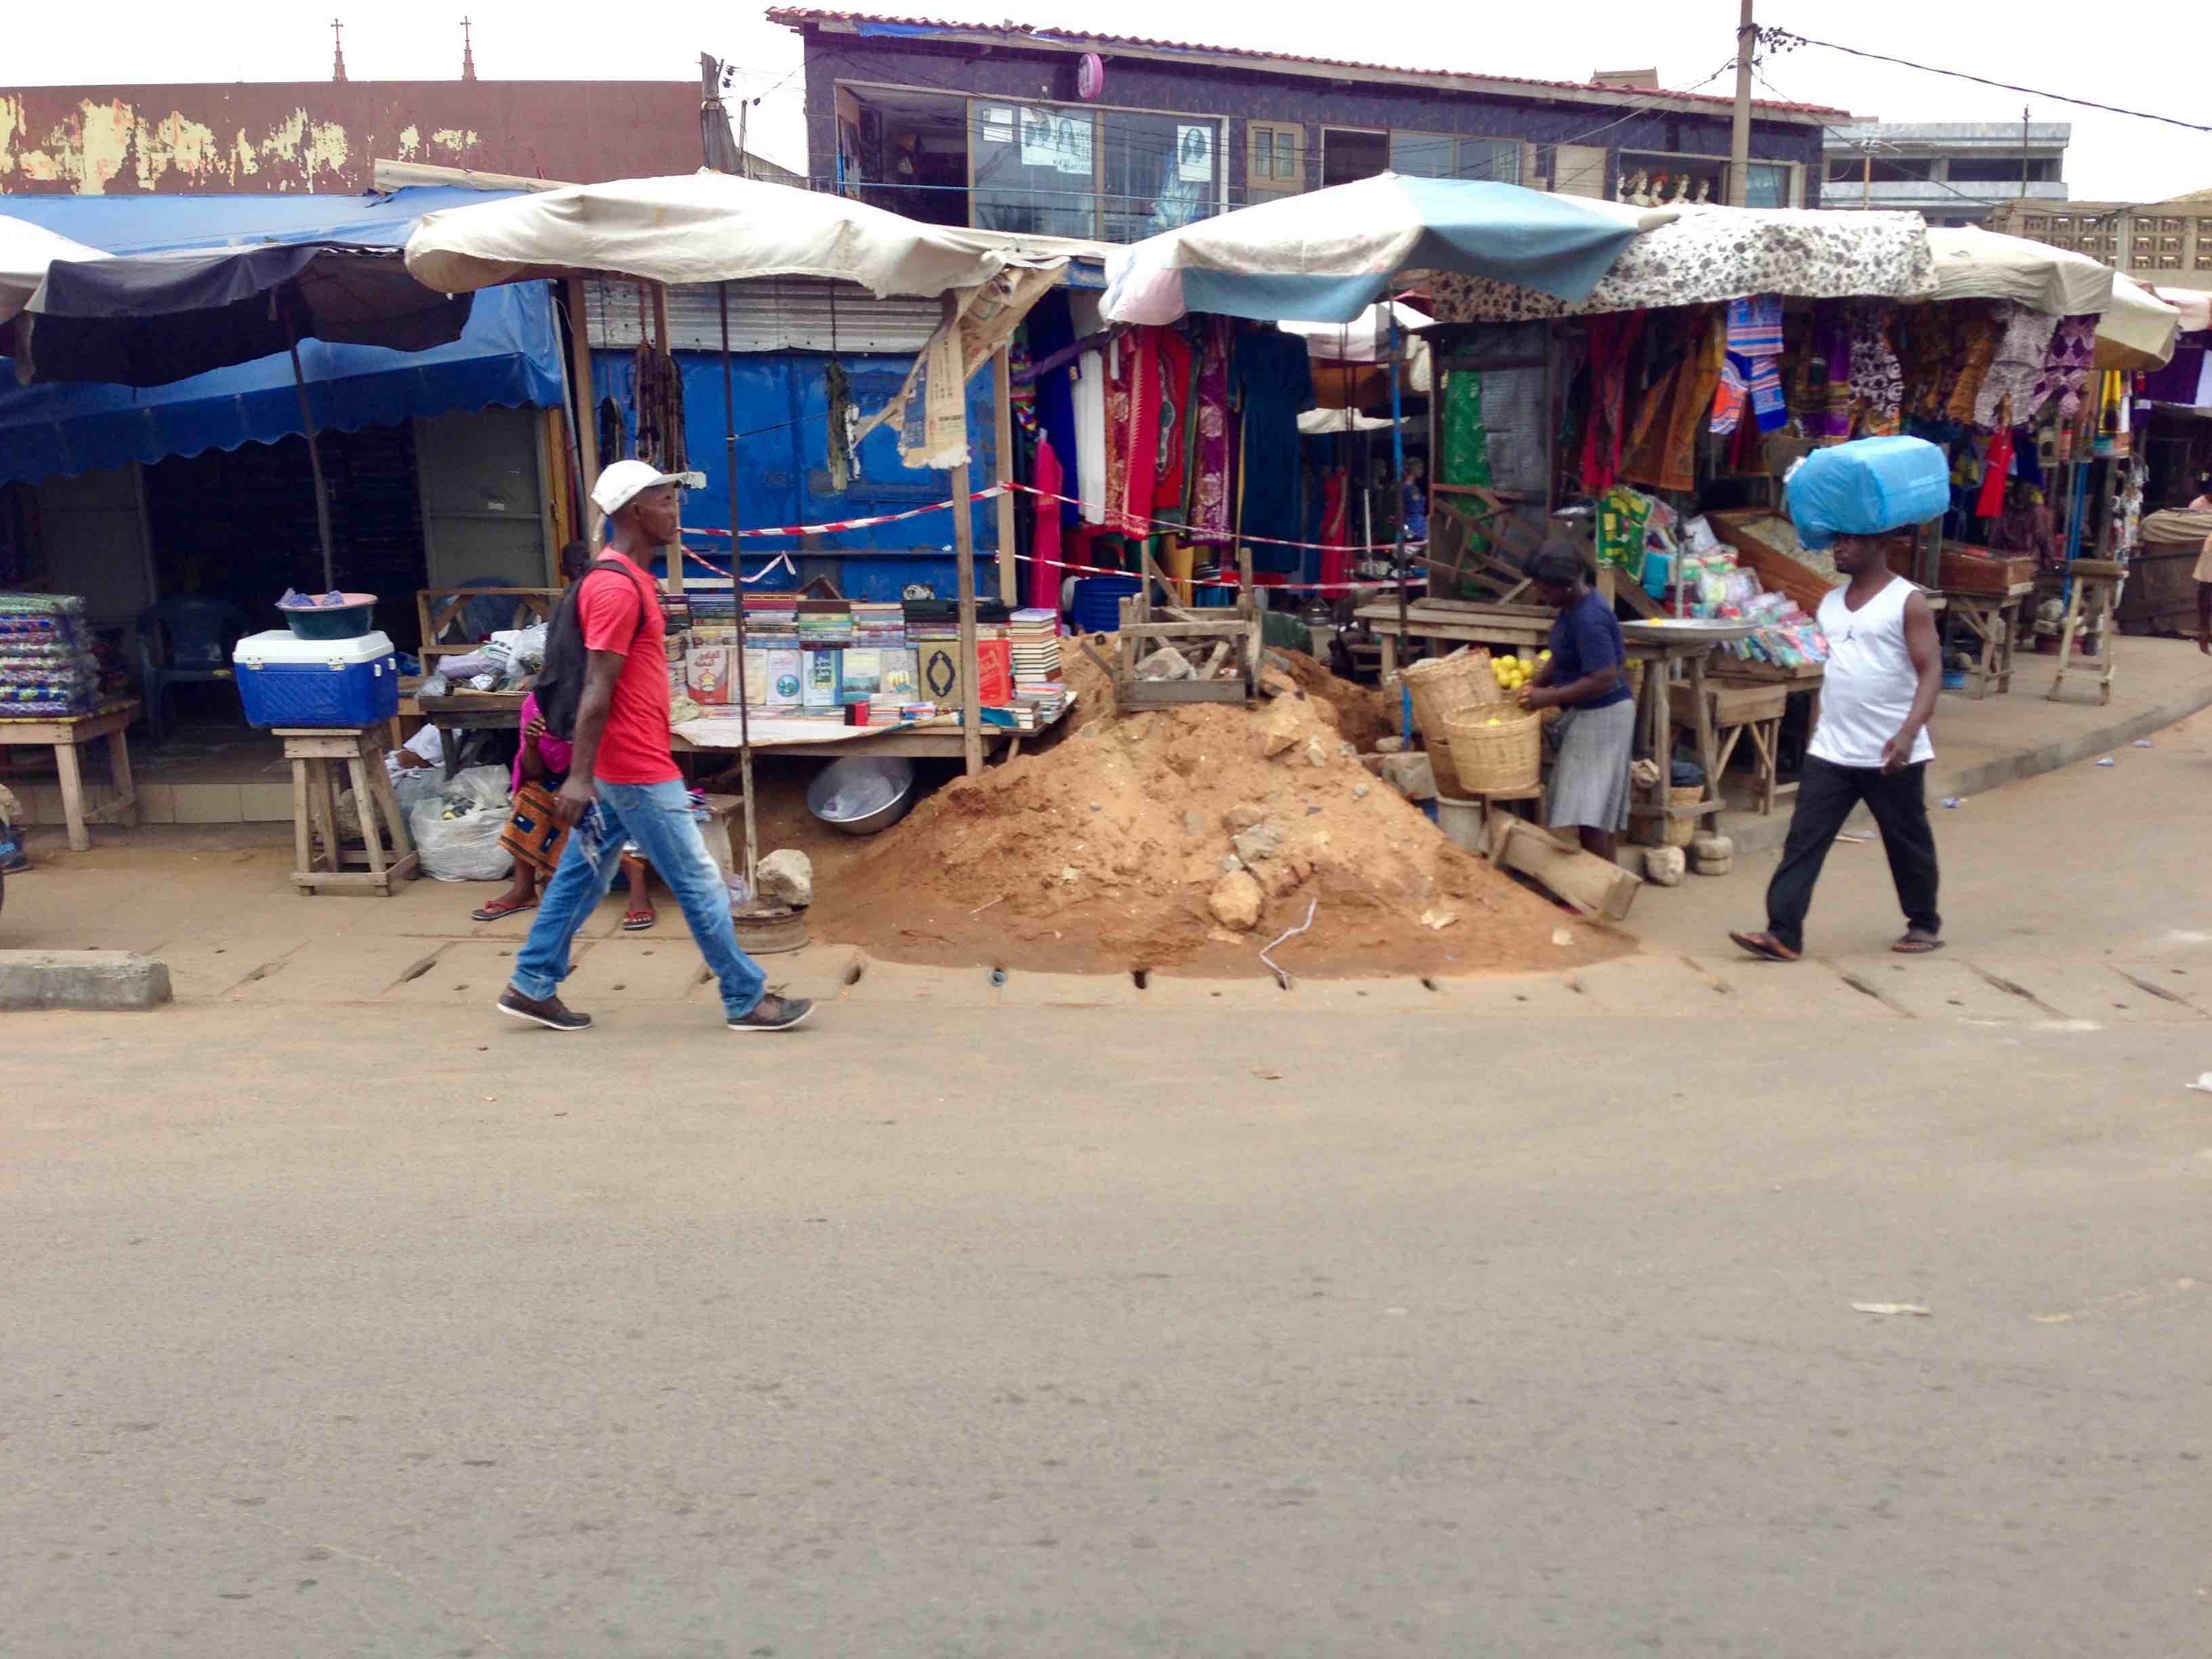 Street market scene, Lome, Togo. #JujuFilms